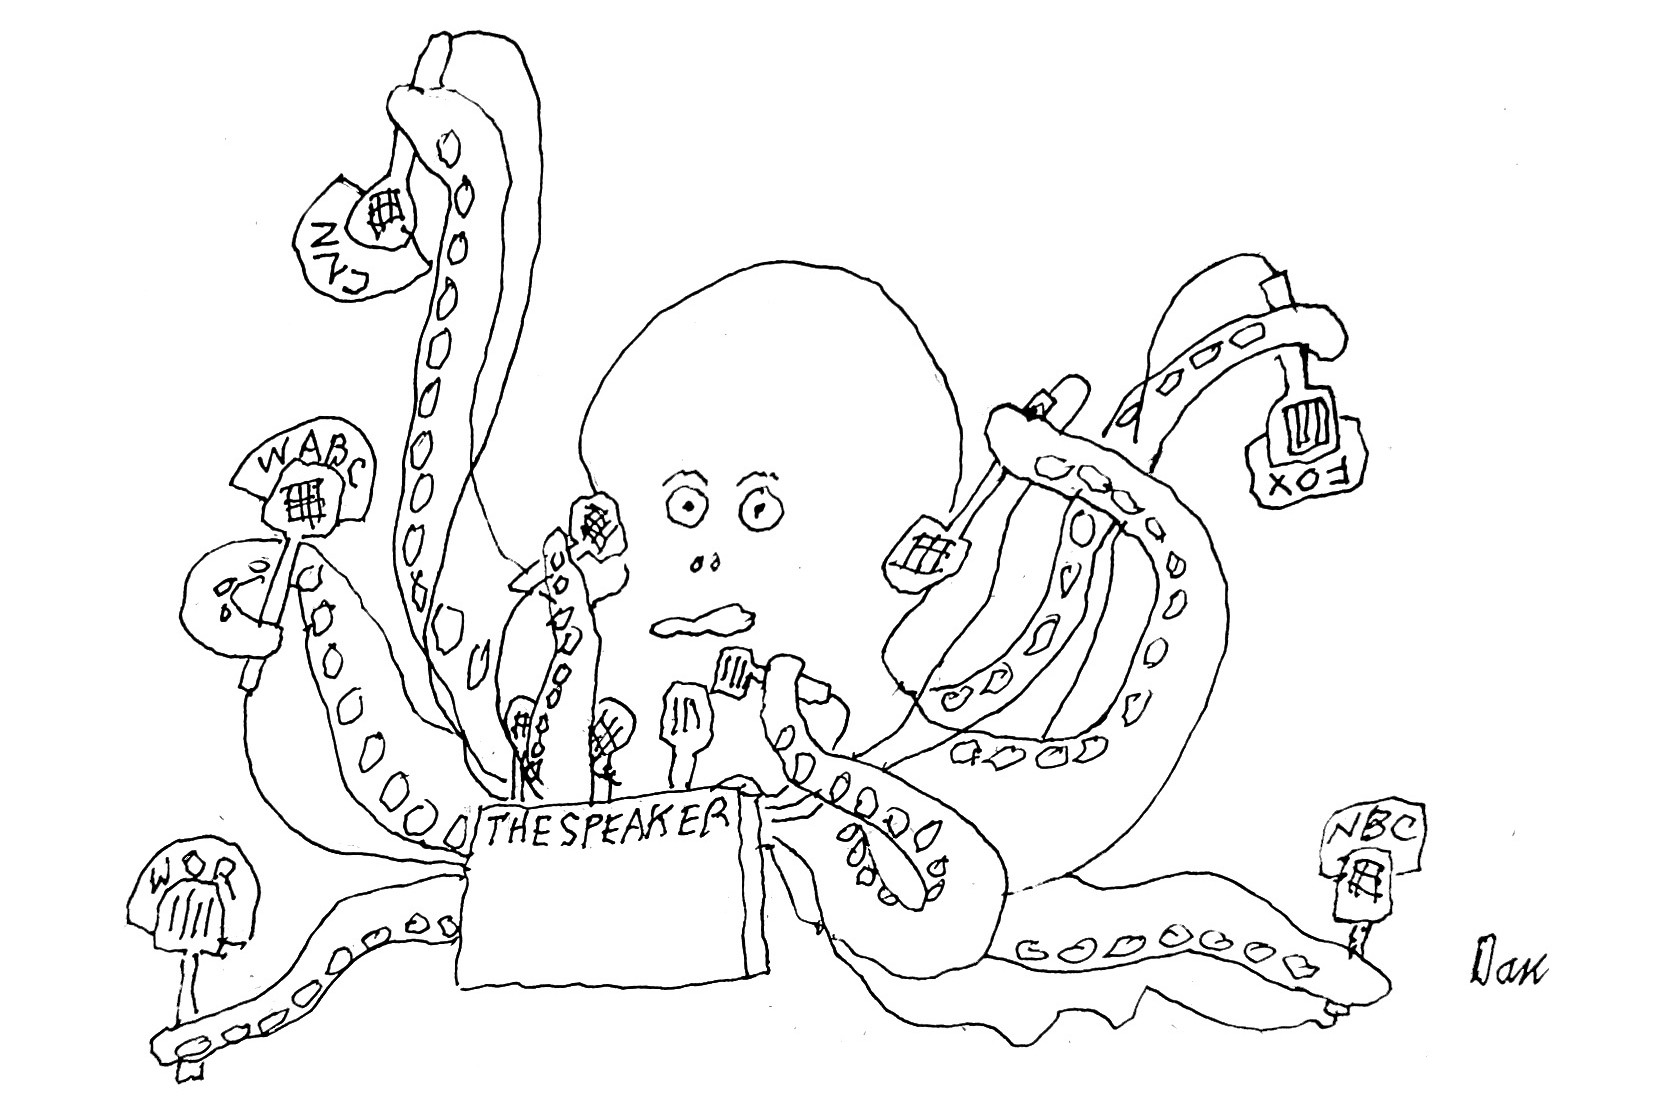 Octopus Speaker cartoon by Dan Rattiner